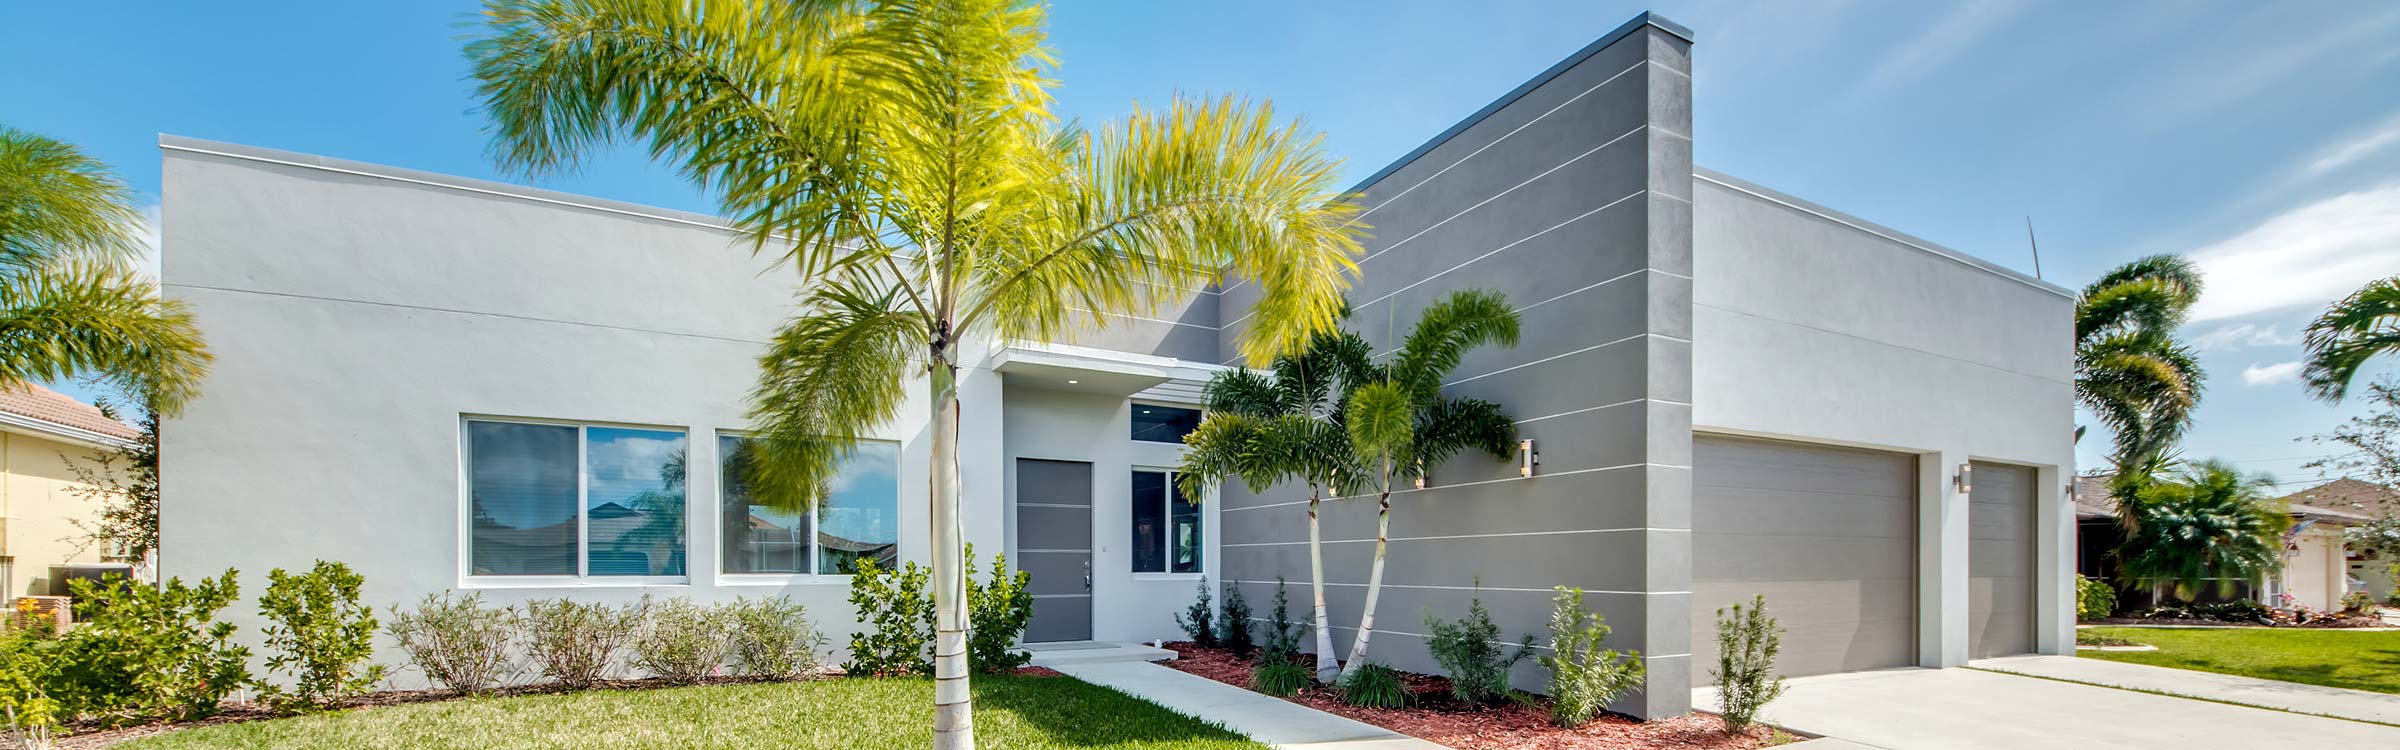 Neubau/Hausbau Cape Coral, Fort Myers, Florida - Bauplanung